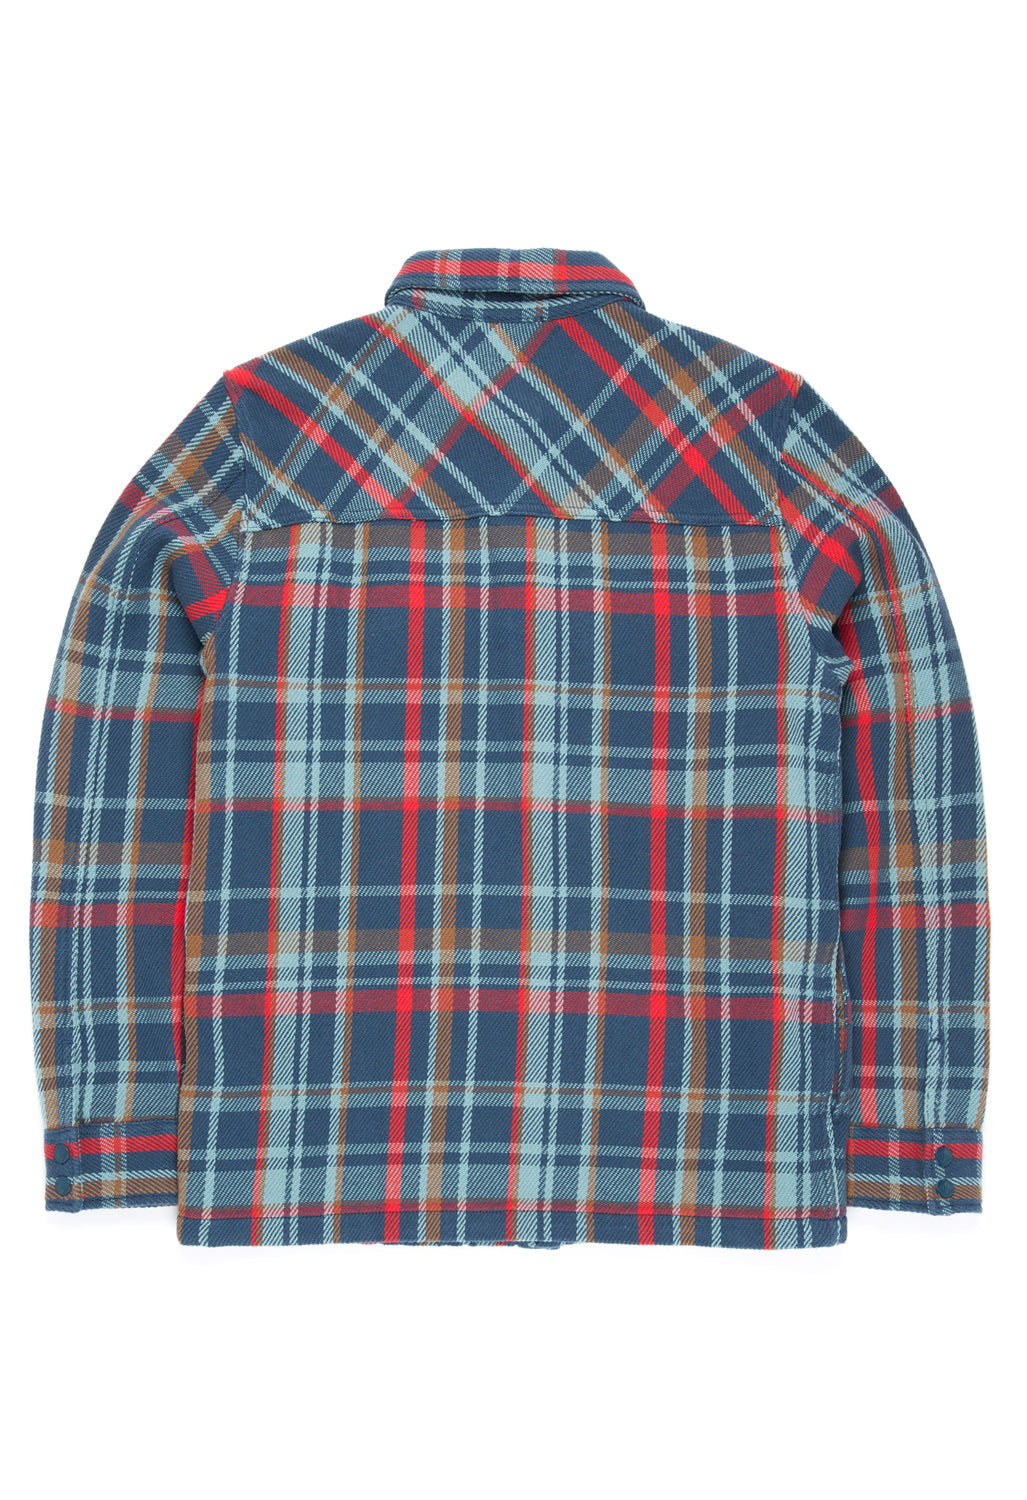 Topo Designs Men's Mountain Shirt Jacket - Pond Blue Multi Plaid